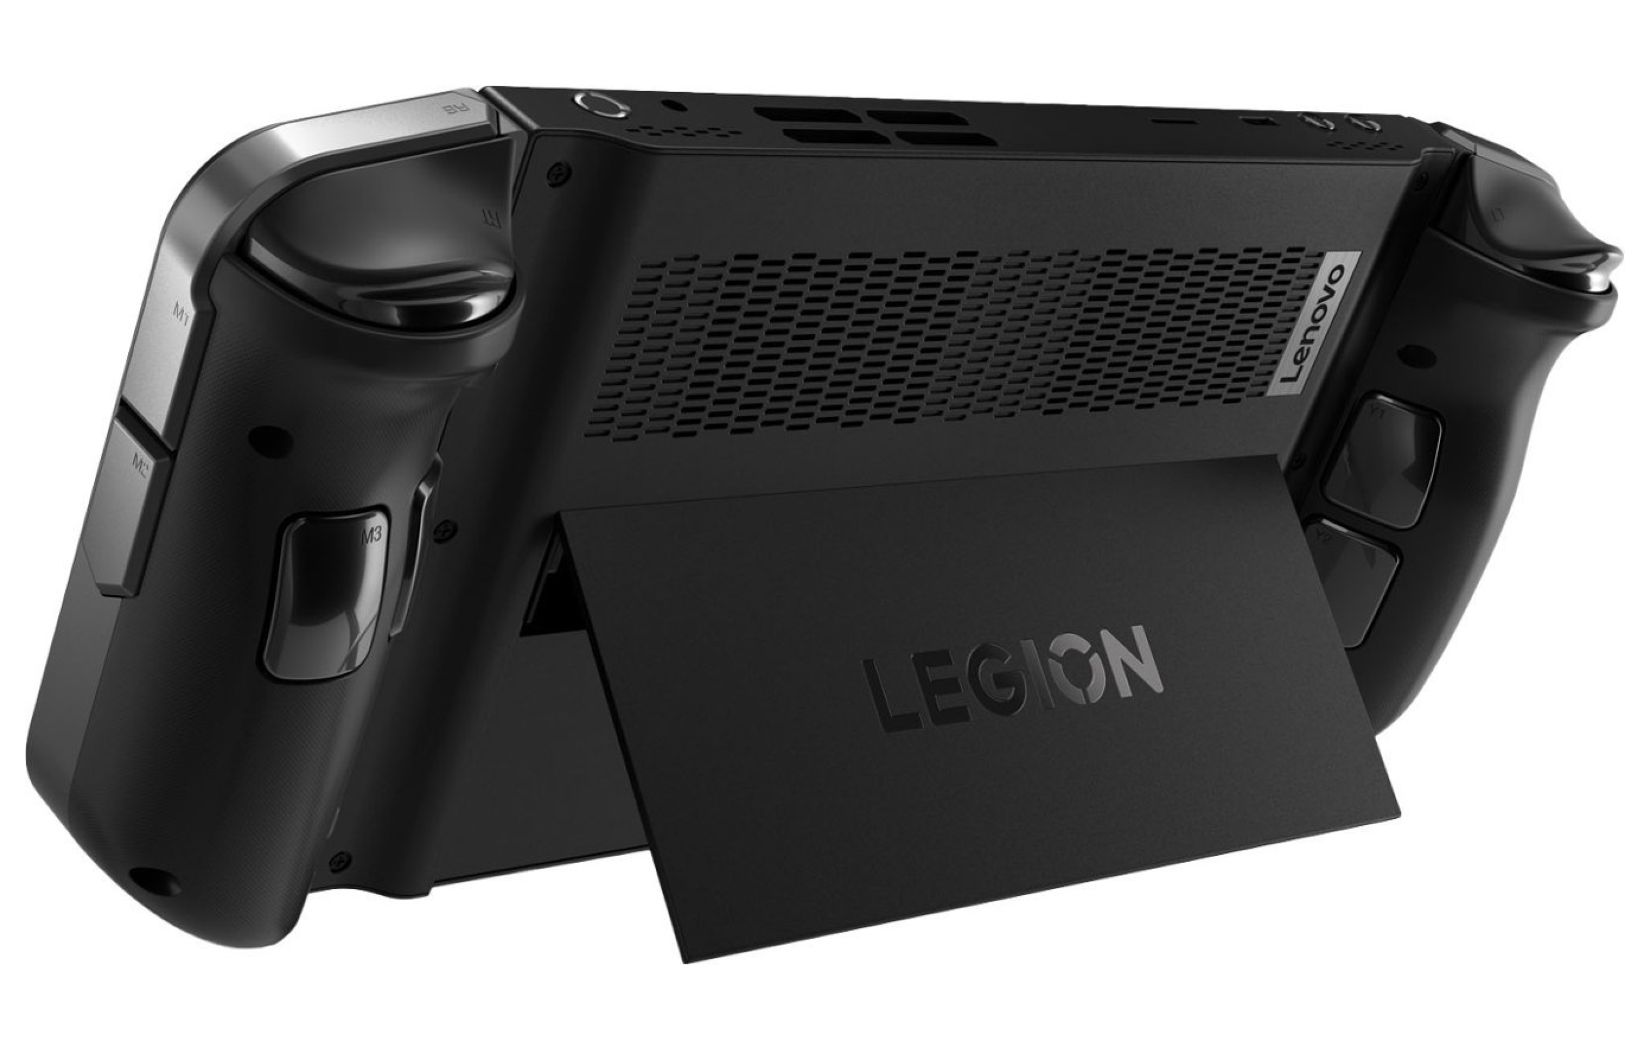 Lenovo Legion Go price: $699 starting in October – everything you